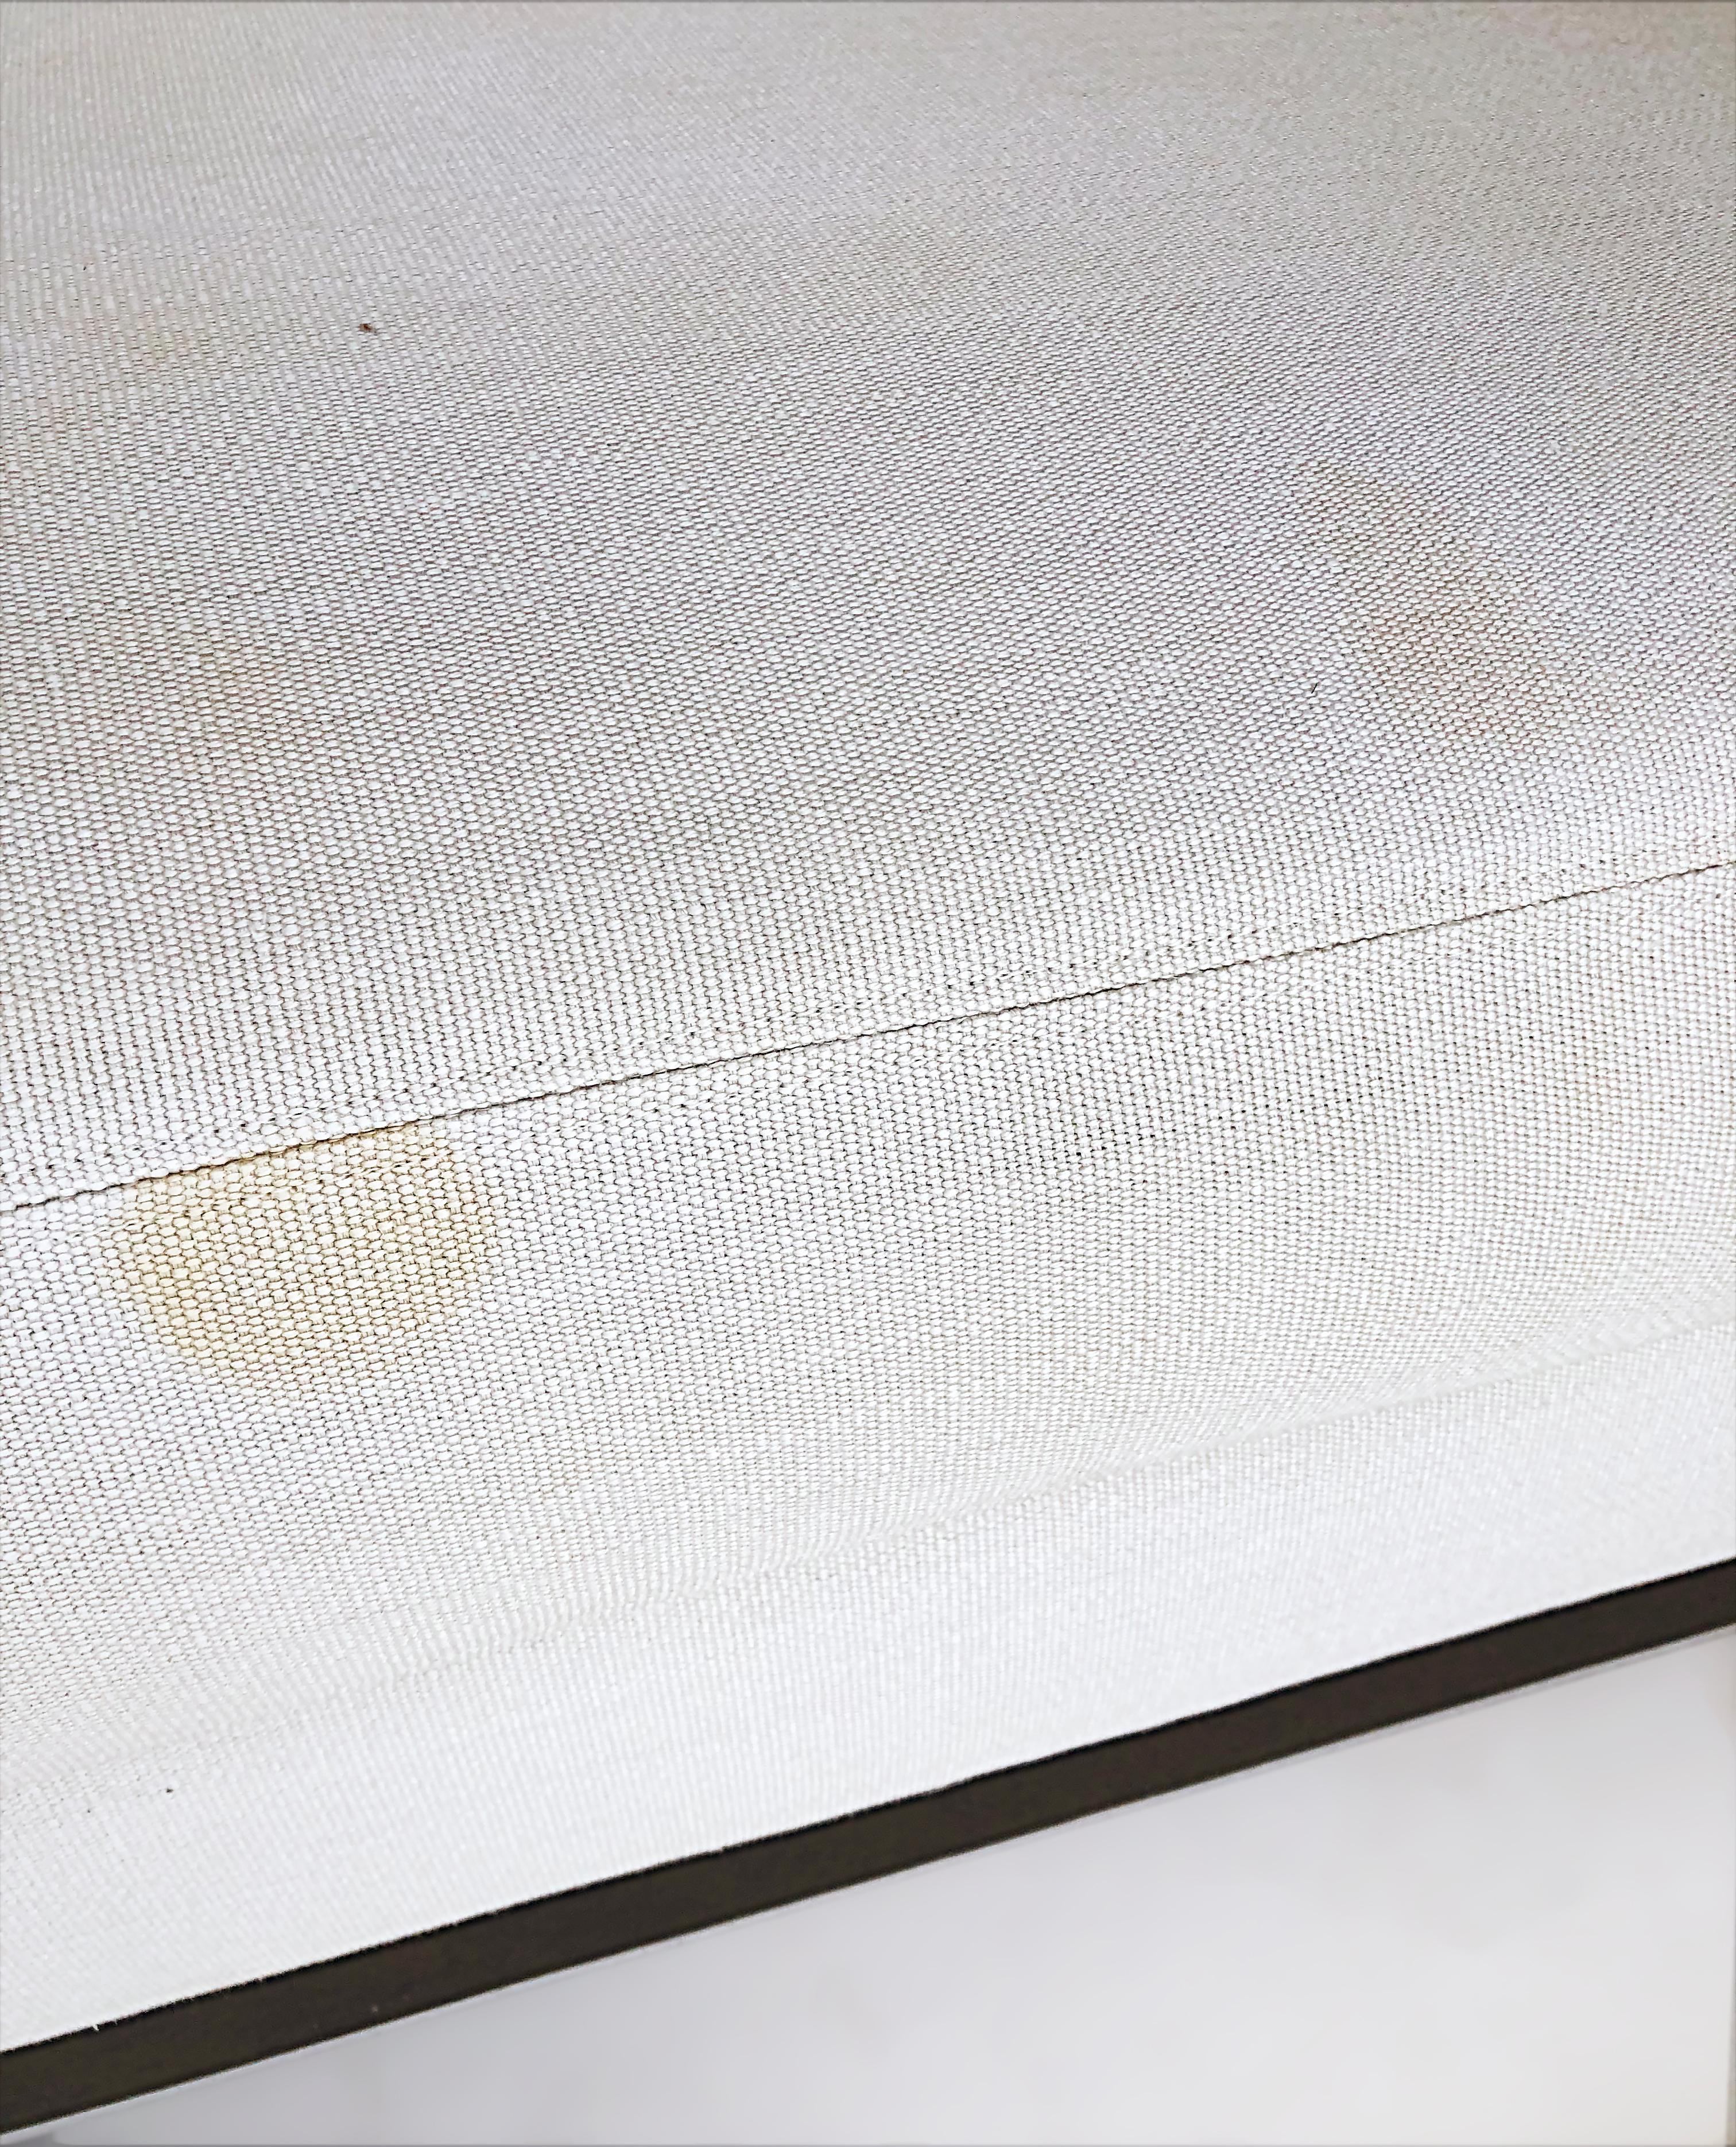 Christian Liaigre Beluga Sofa, Ebonized Wood w/Liaigre Belgian Linen Upholstery 2